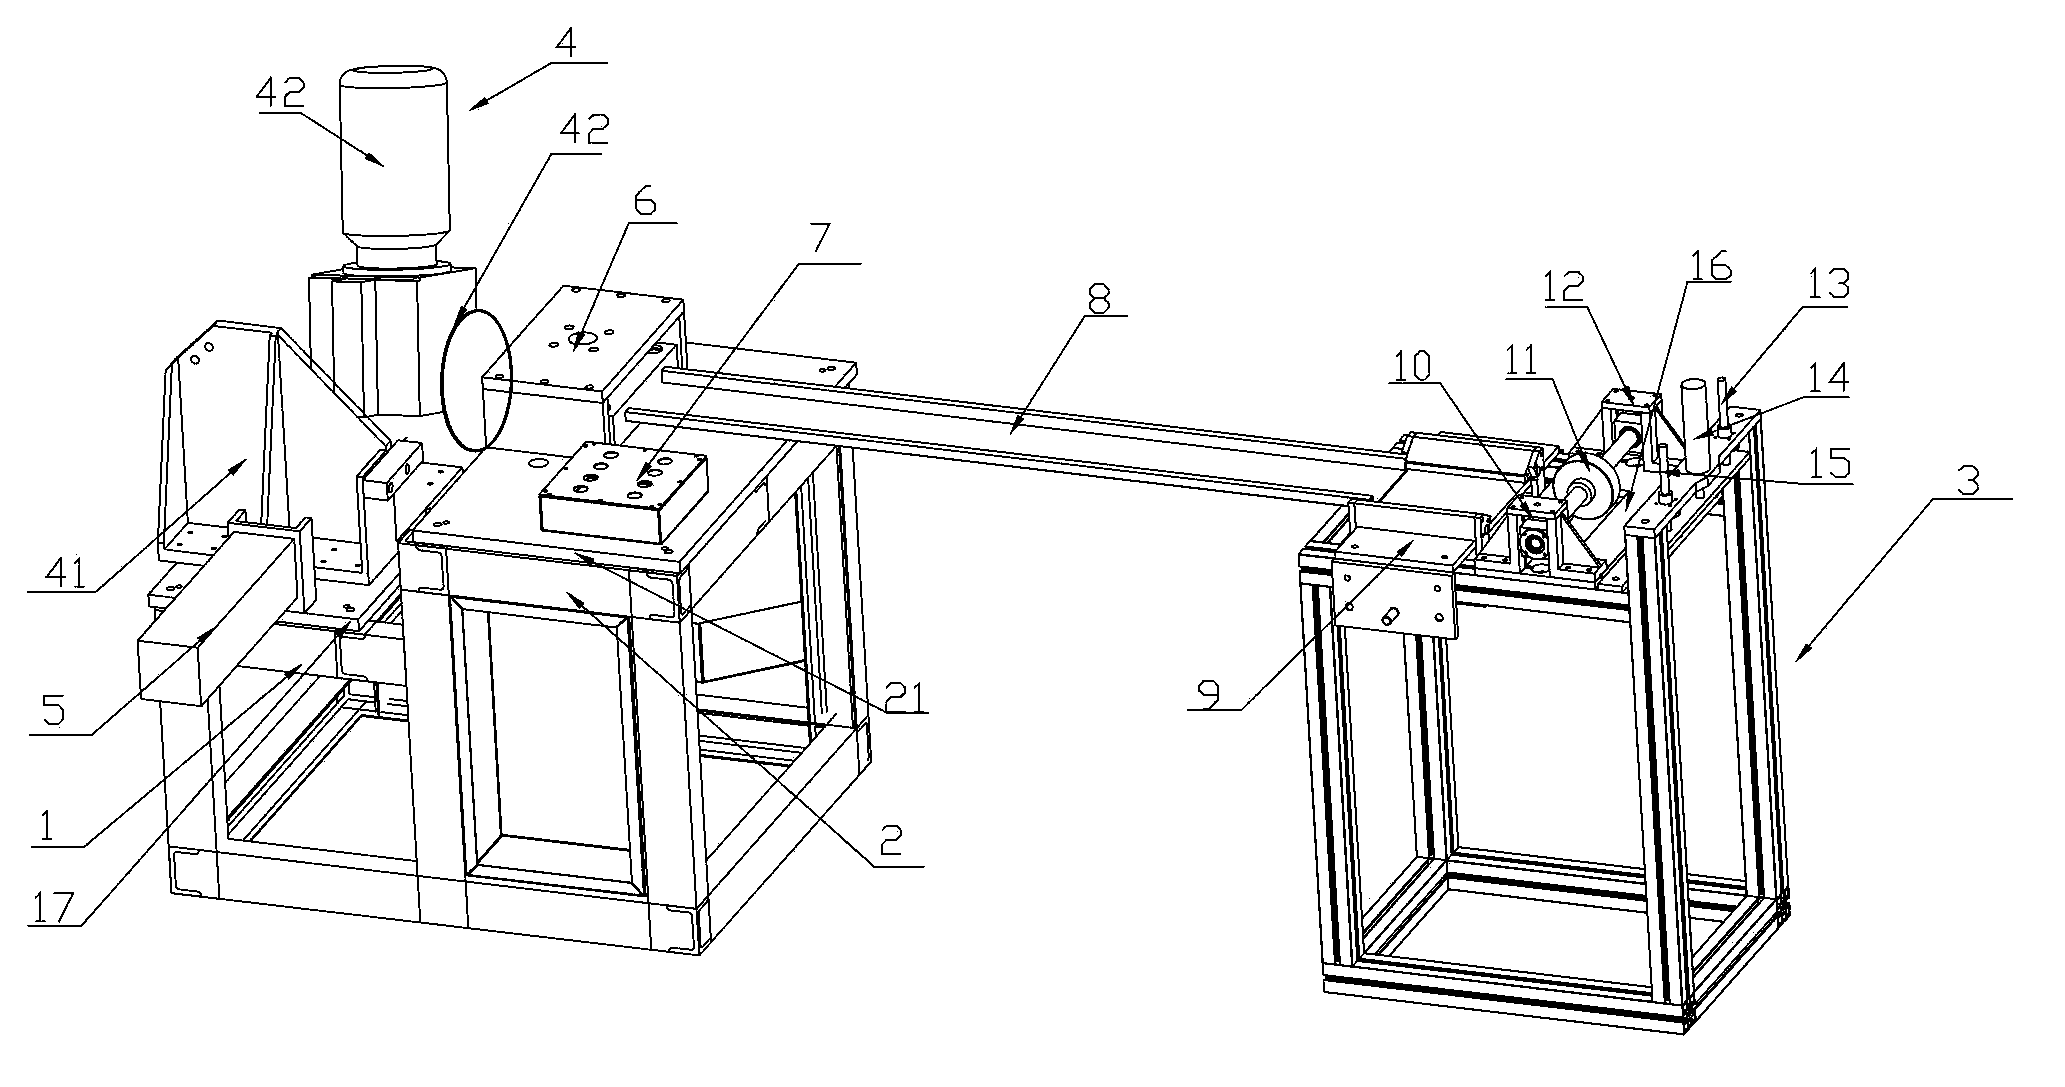 Planar sawing machine